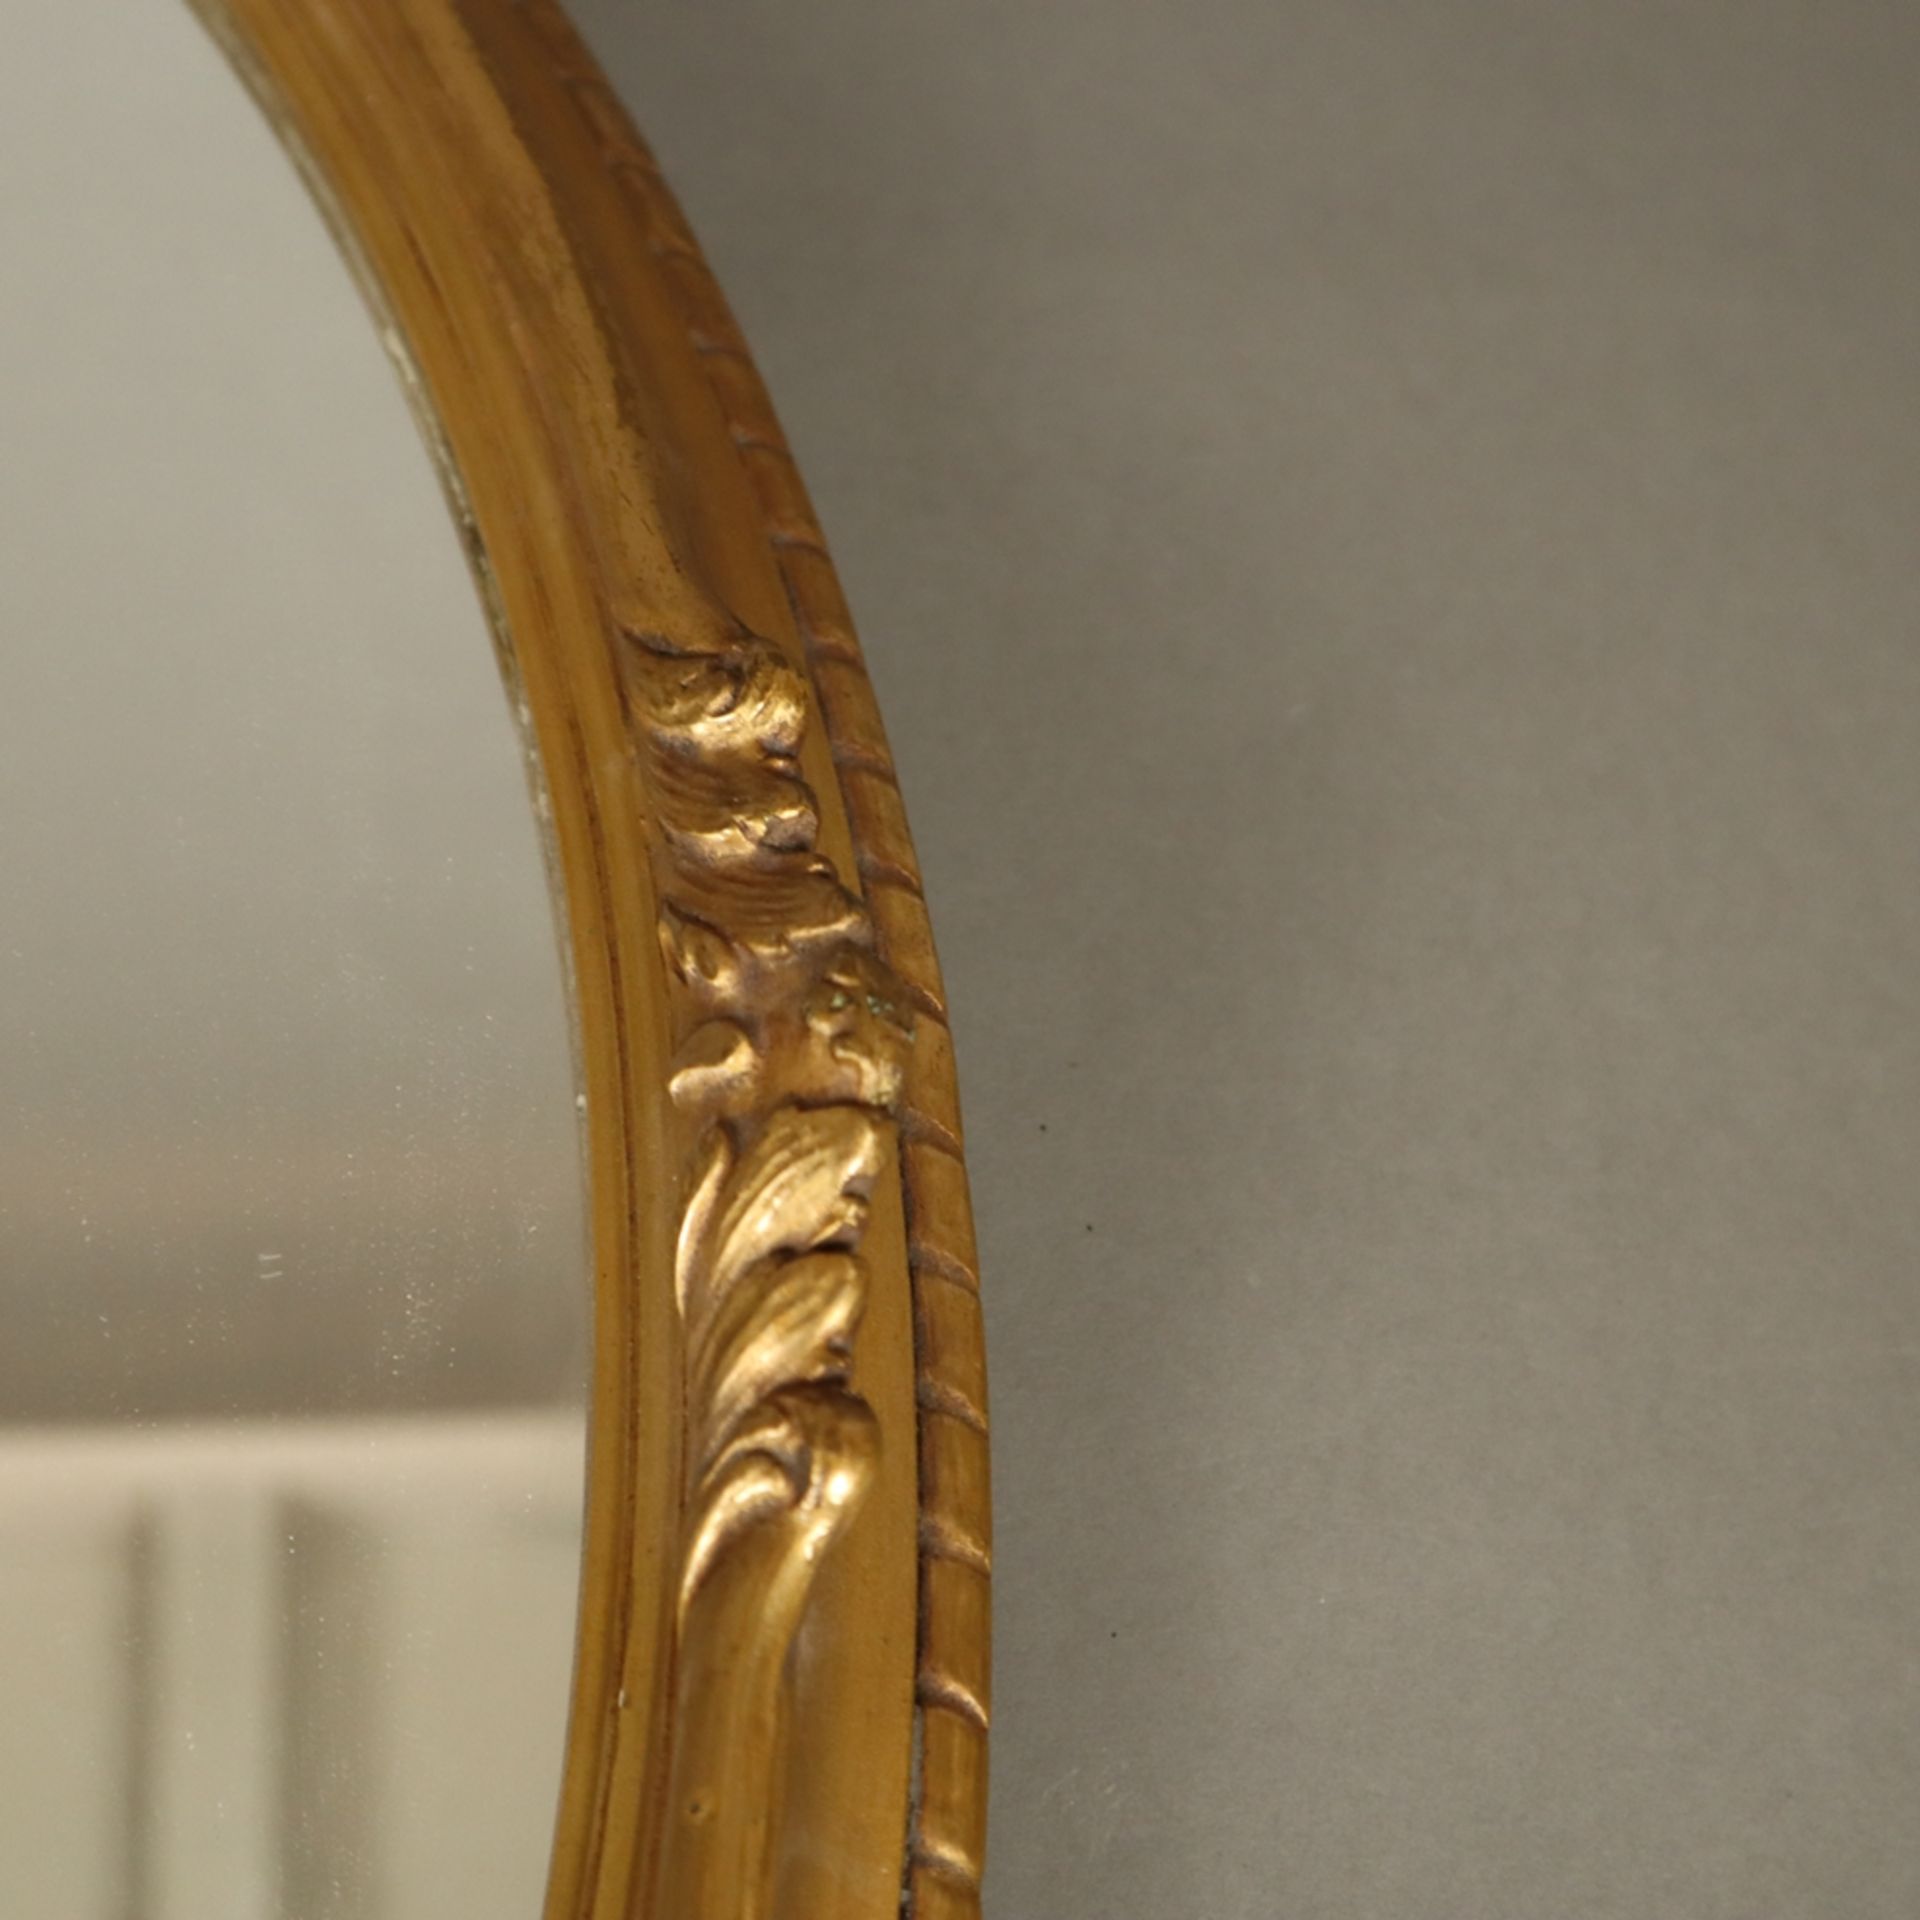 Wandspiegel - Holz/Stuck, ovale Form mit Reliefdekor, vergoldet, min. bestoßen, ca.68x58cm - Bild 2 aus 4